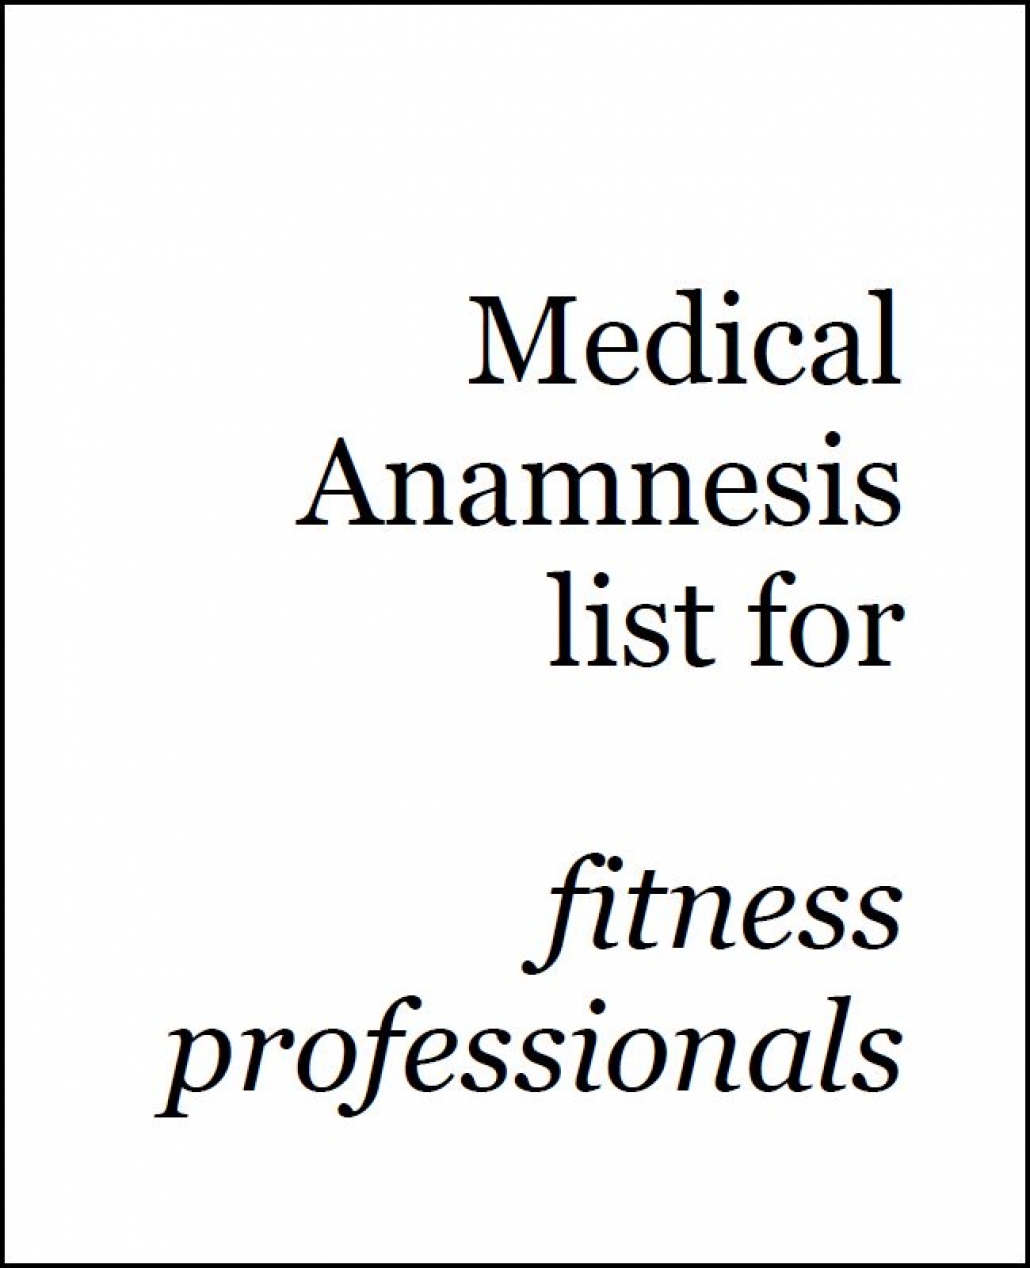 Medical anamnesis list for fitness profs